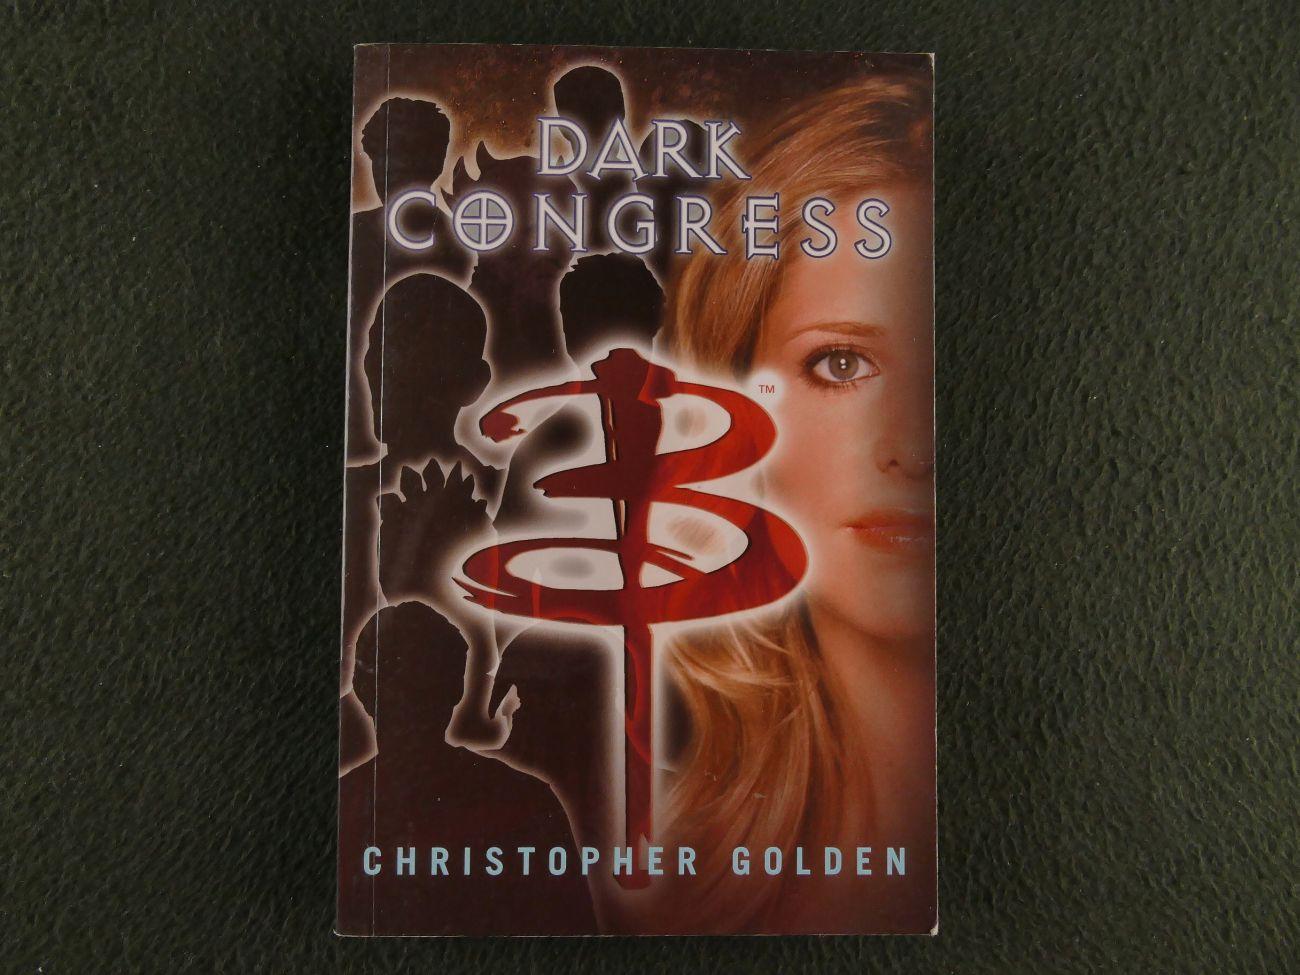 Golden, Christopher - Dark congress (Buffy the vampire slayer)